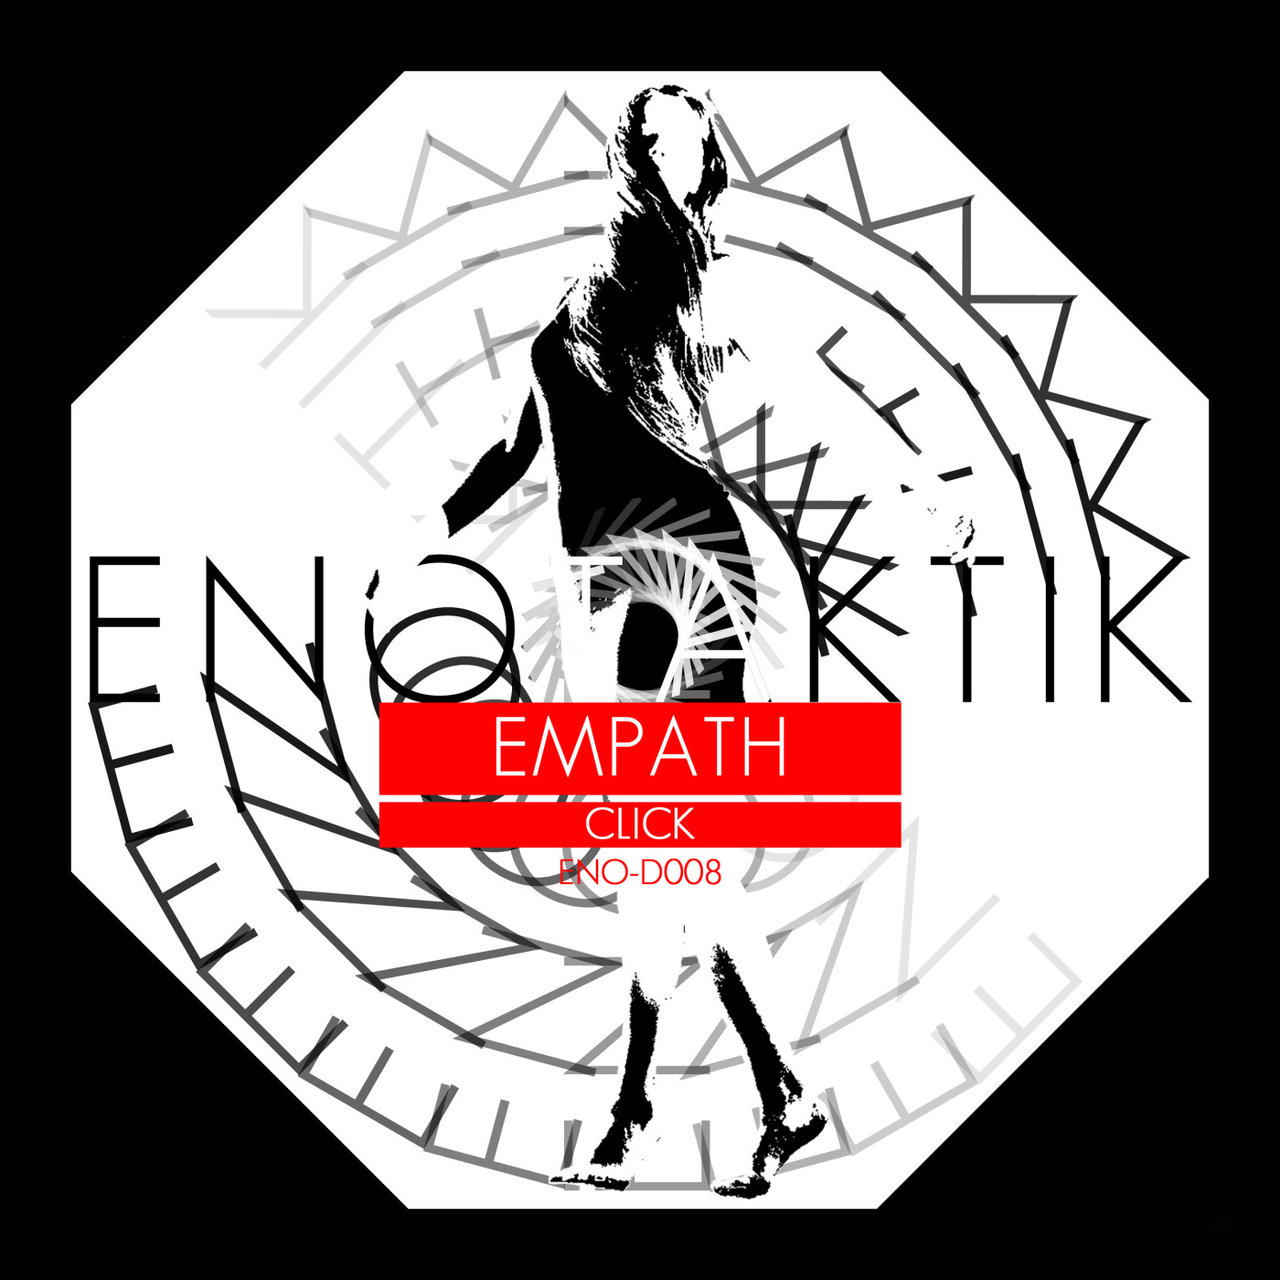 image cover: Empath - Click / ENOD008